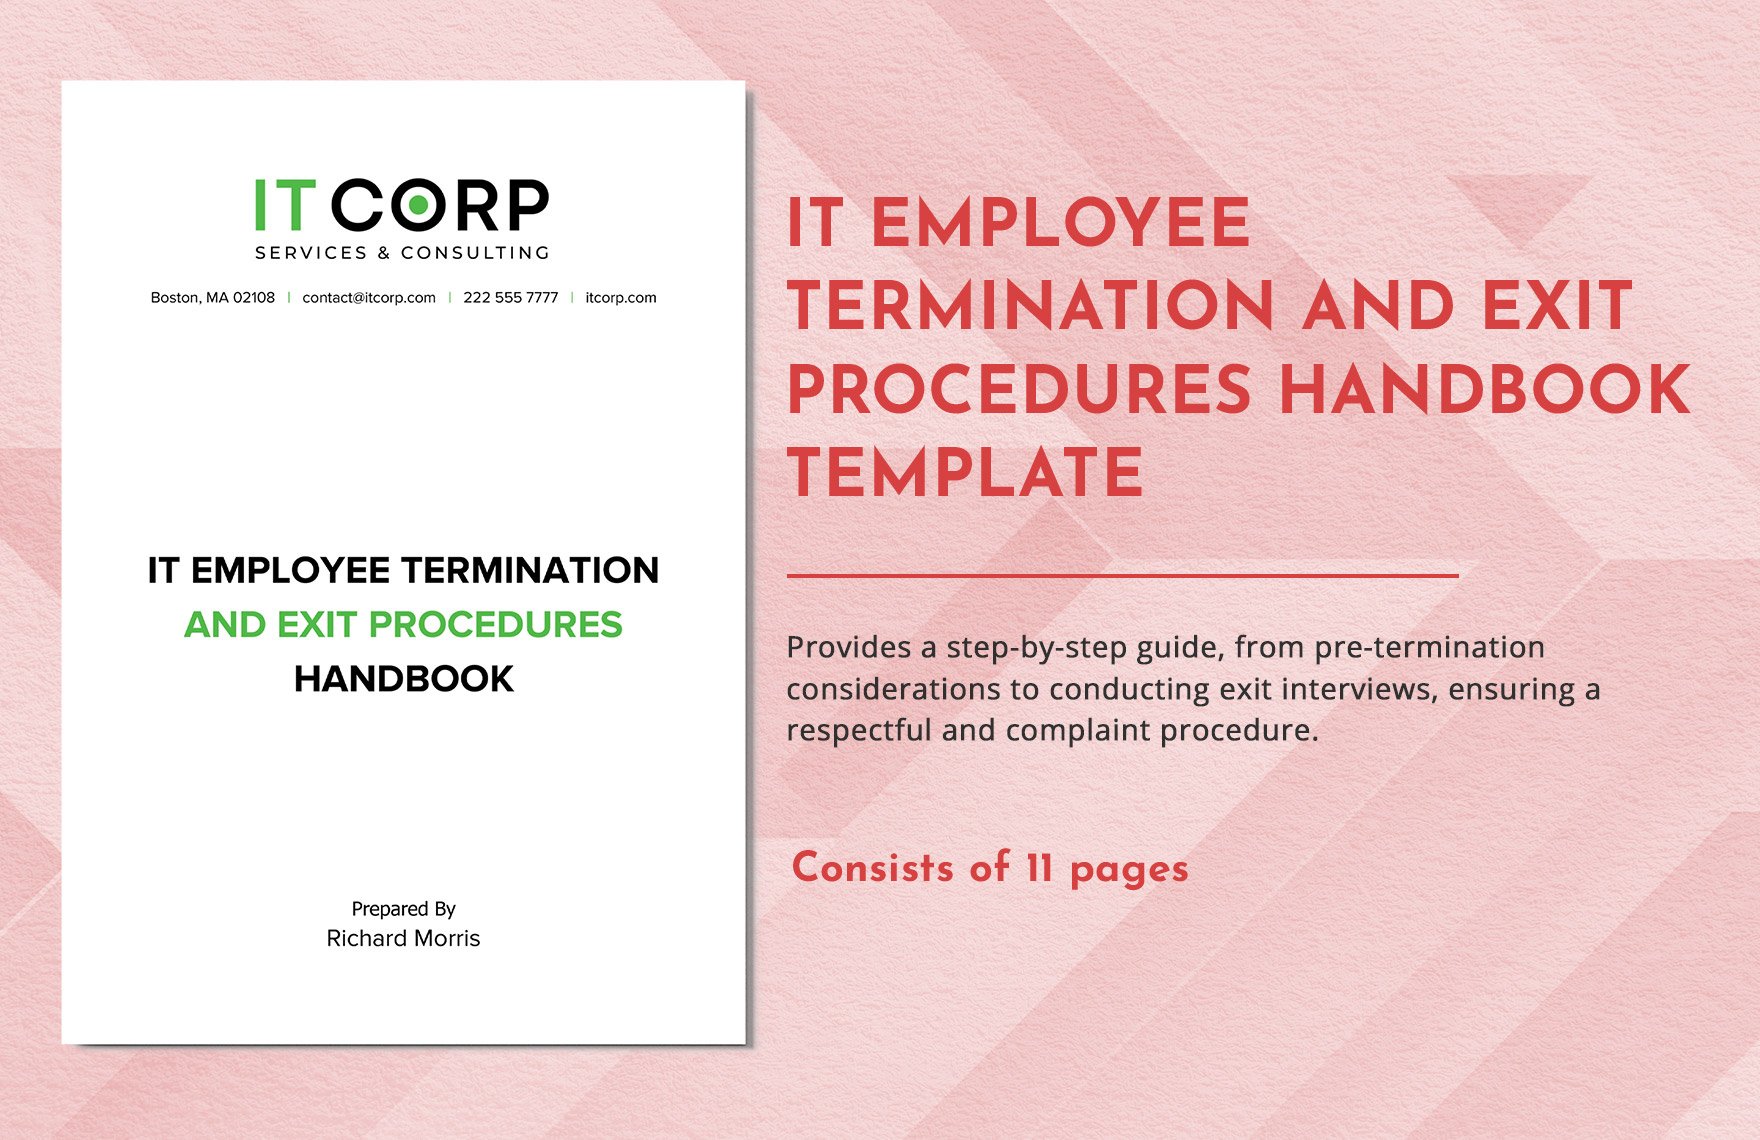 IT Employee Termination and Exit Procedures Handbook Template